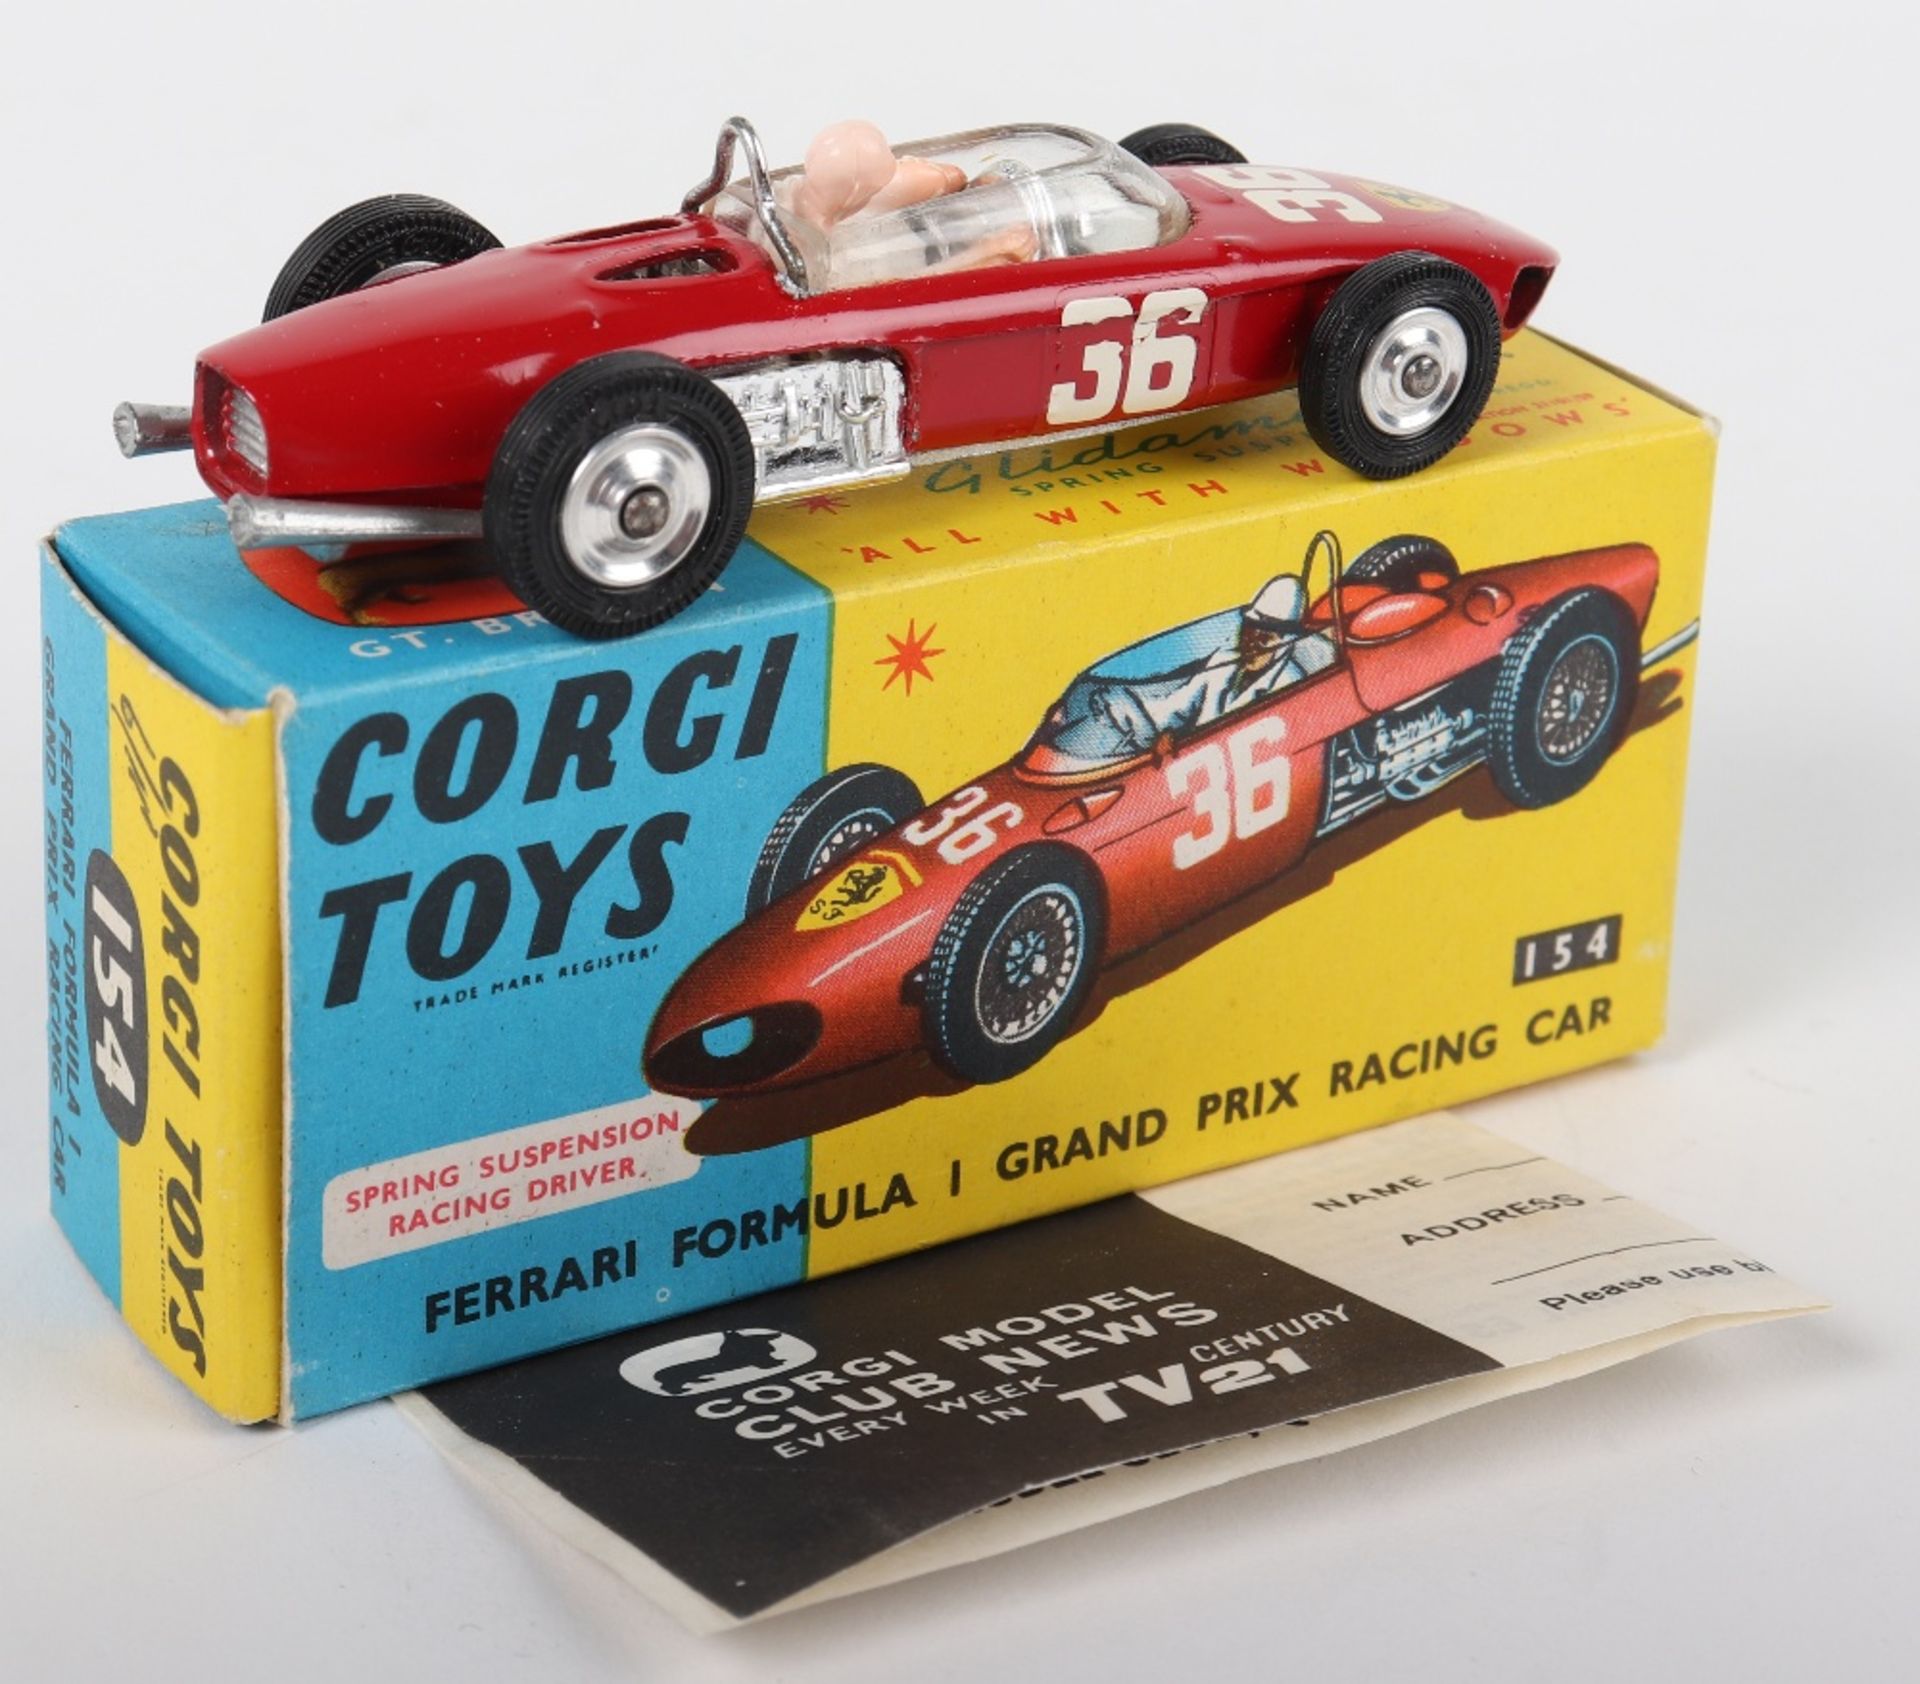 Corgi Toys 154 Ferrari Formula 1 Grand Prix Racing Car - Image 2 of 3